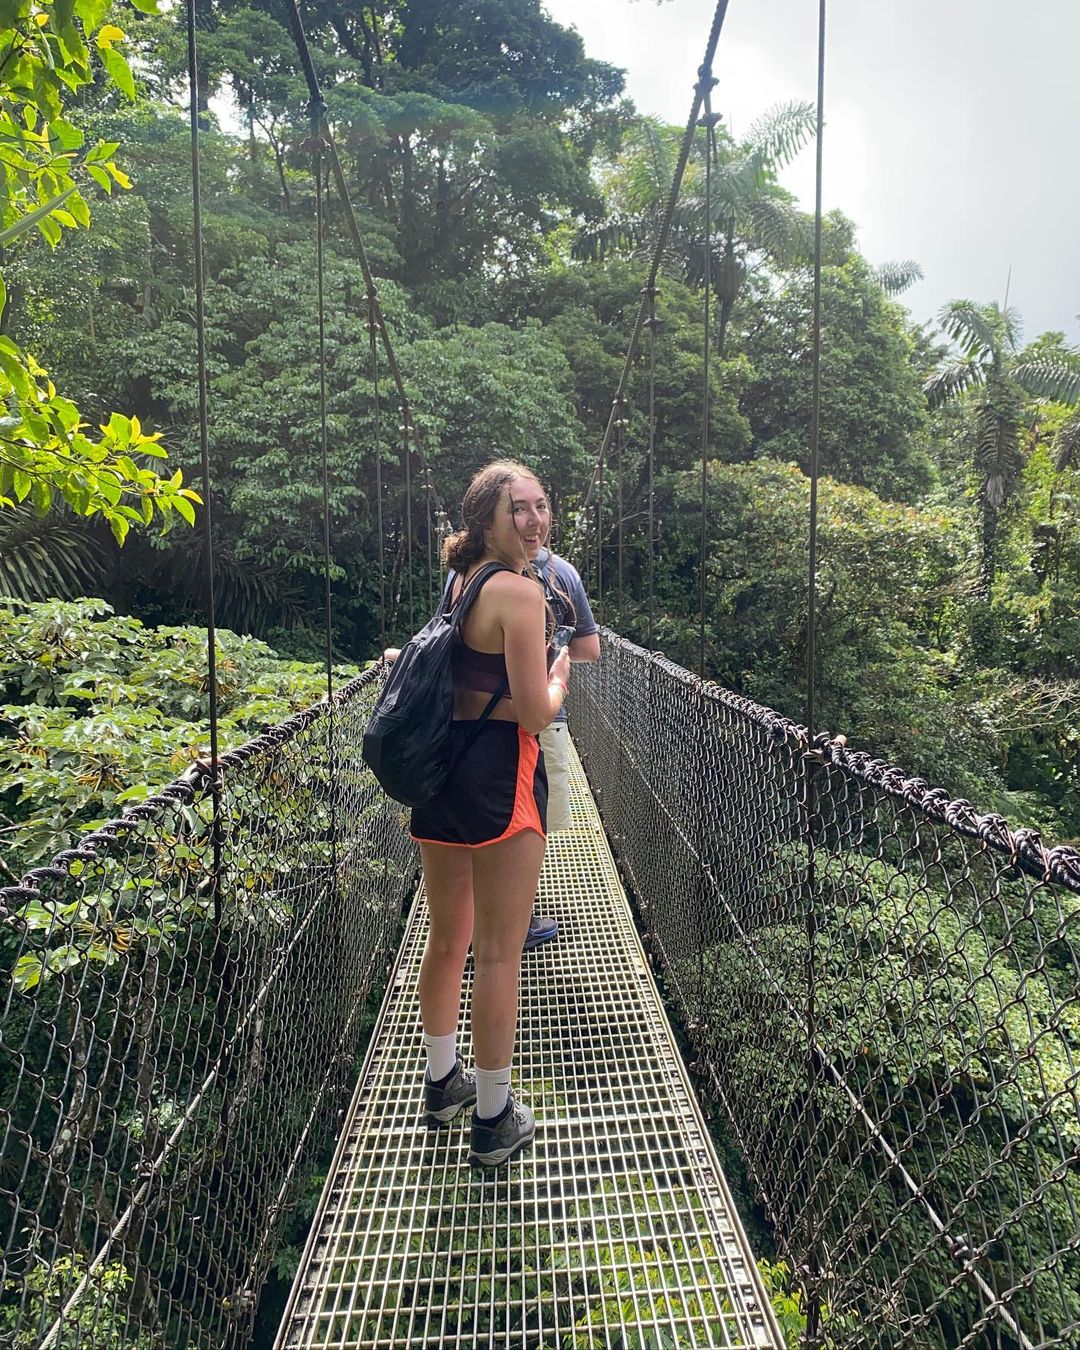 Girl walking on metal bridge above trees